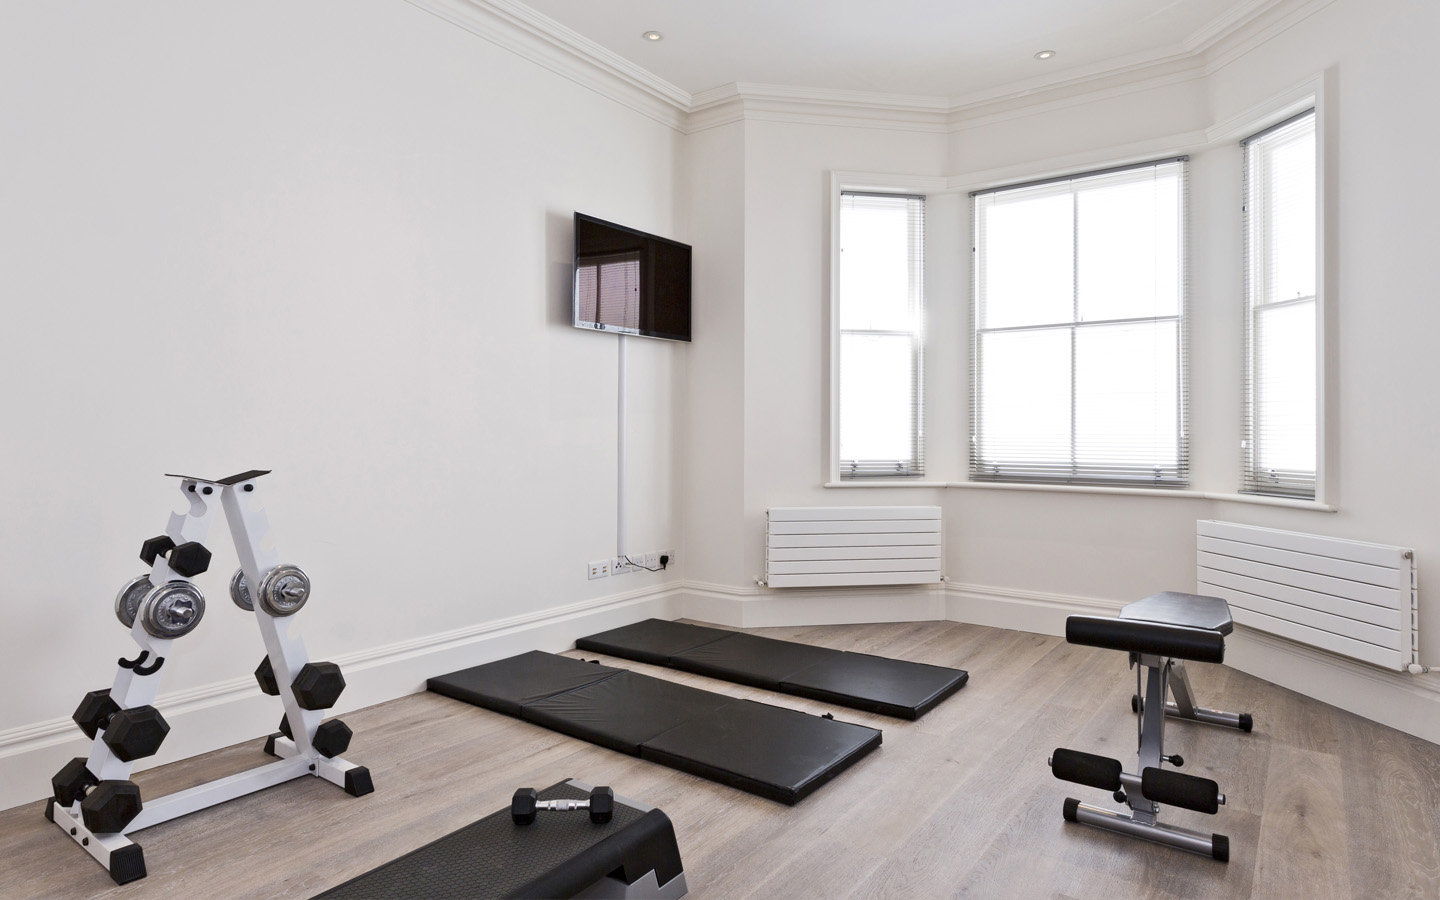 maid room transformation ideas: home gym setup